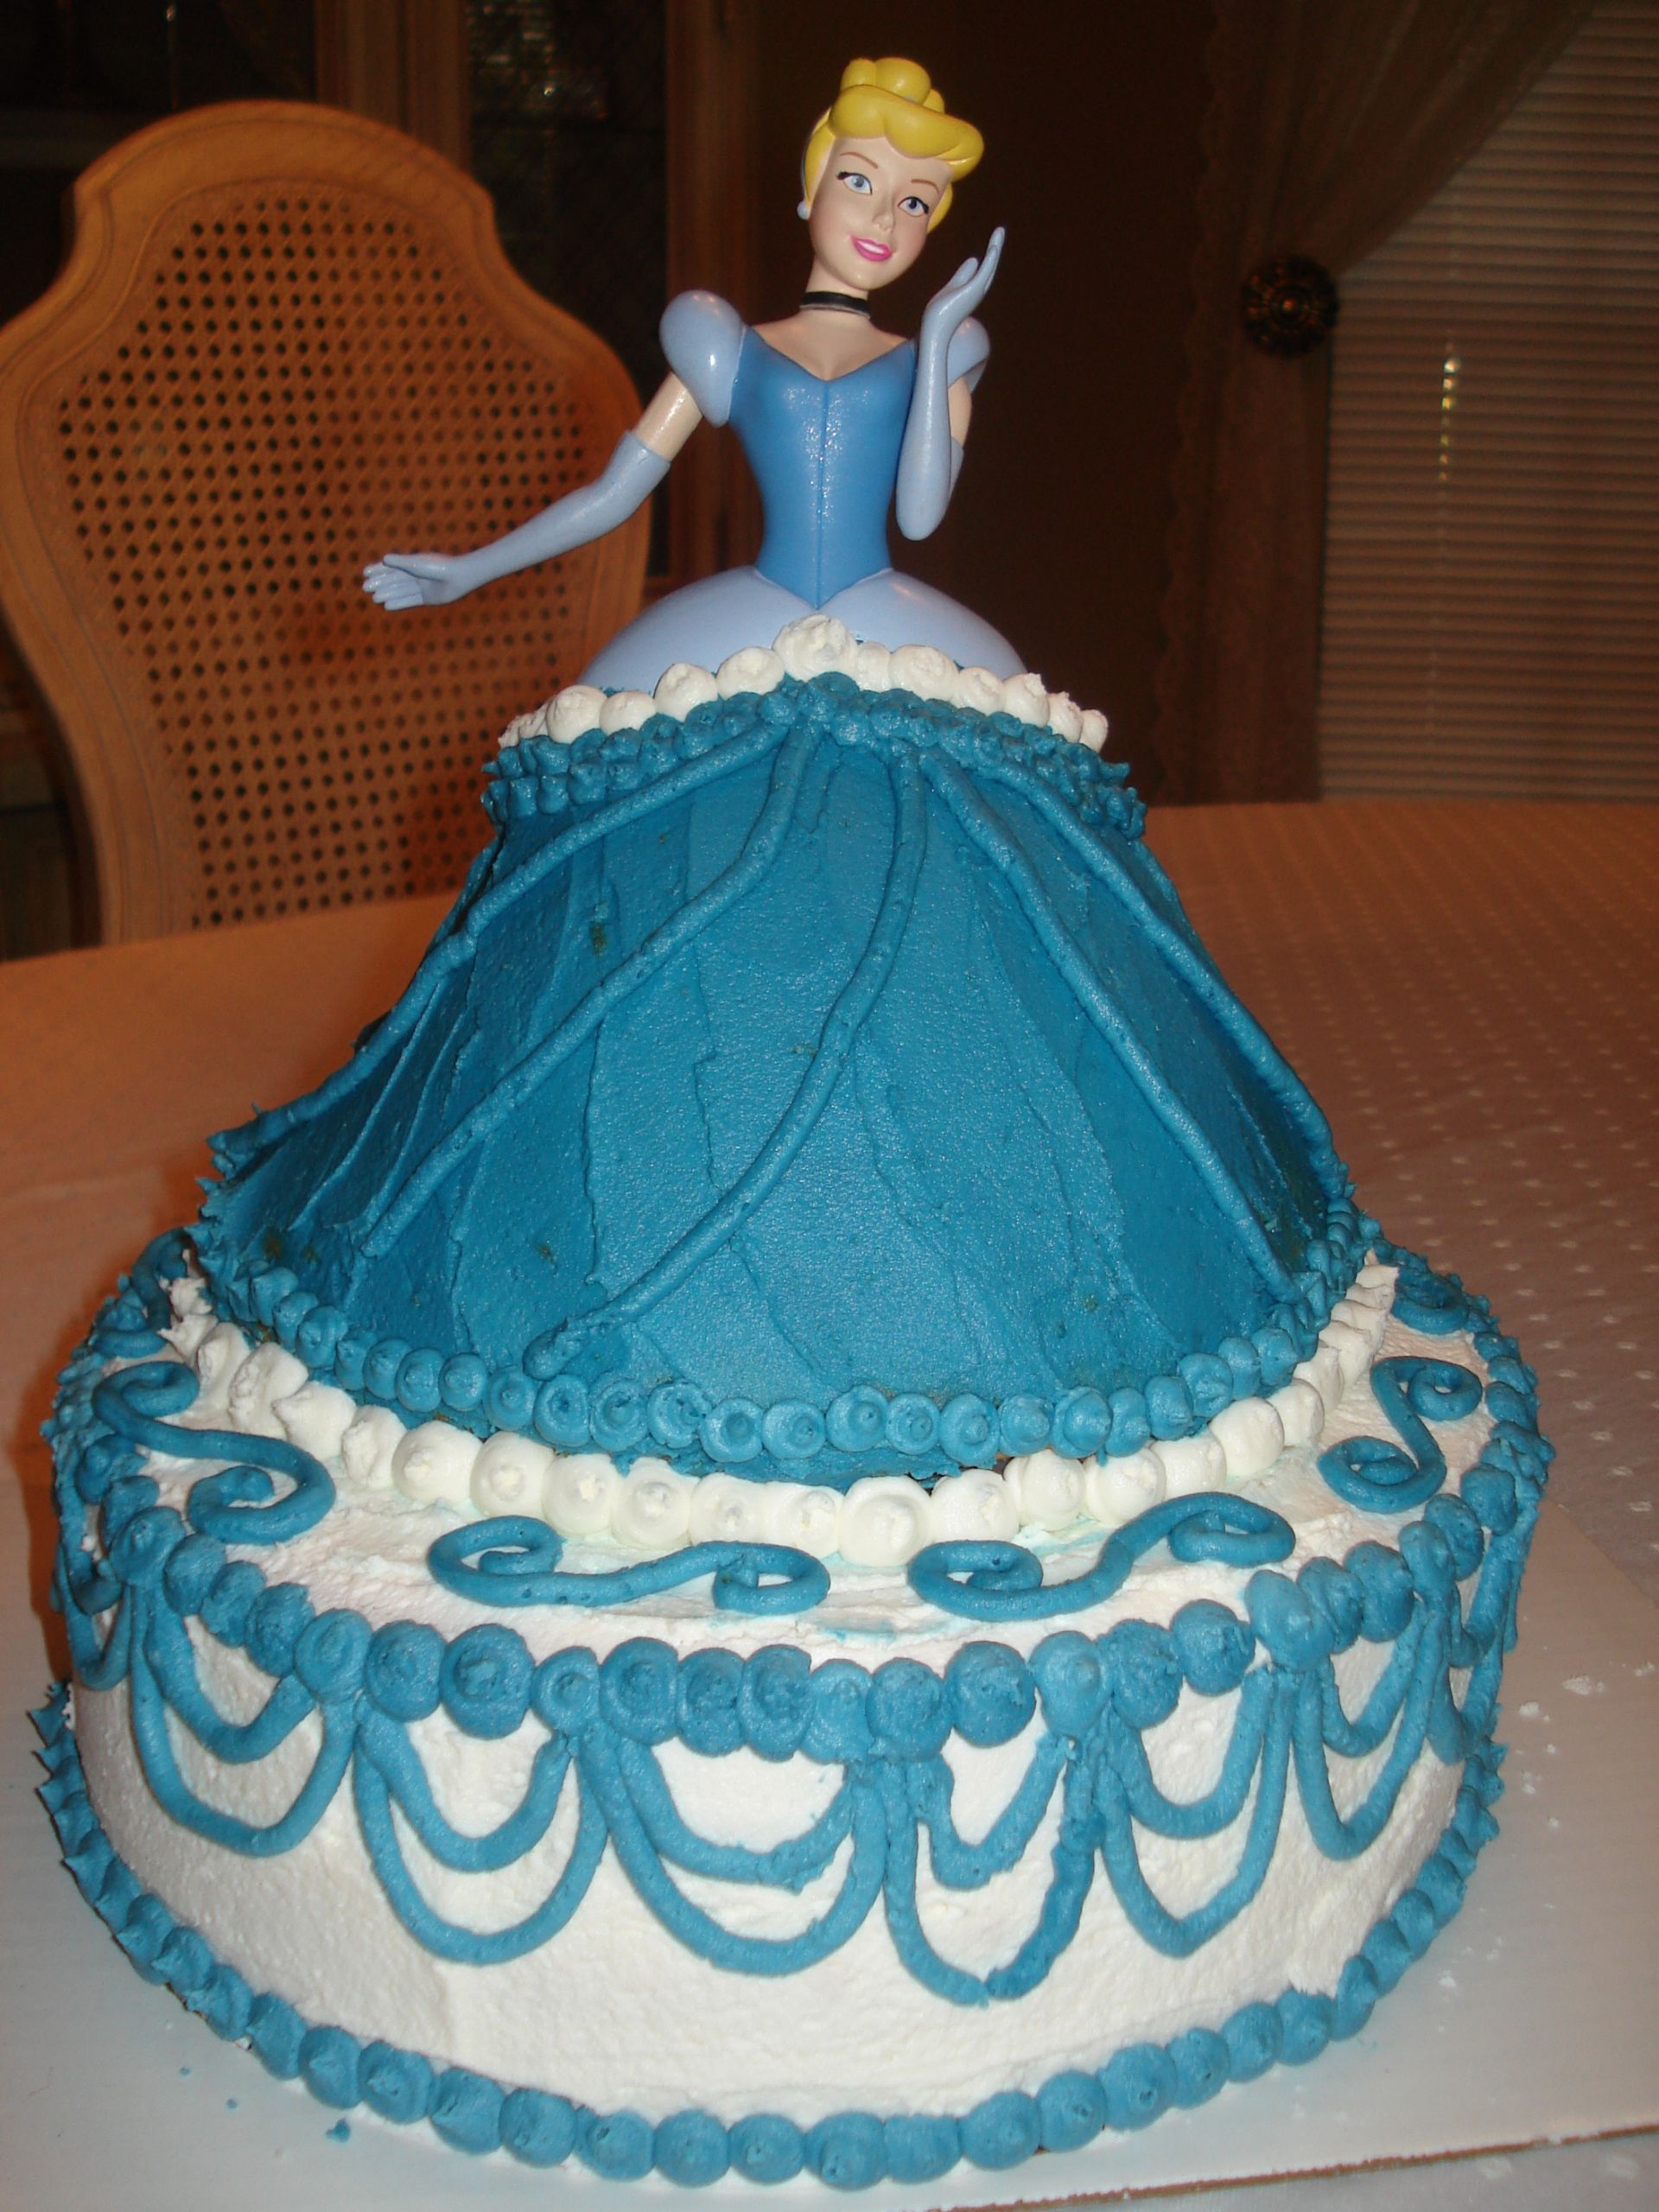 Cinderella Birthday Cakes
 Houston Baker Makes Peanut Nut Free Cinderella Birthday